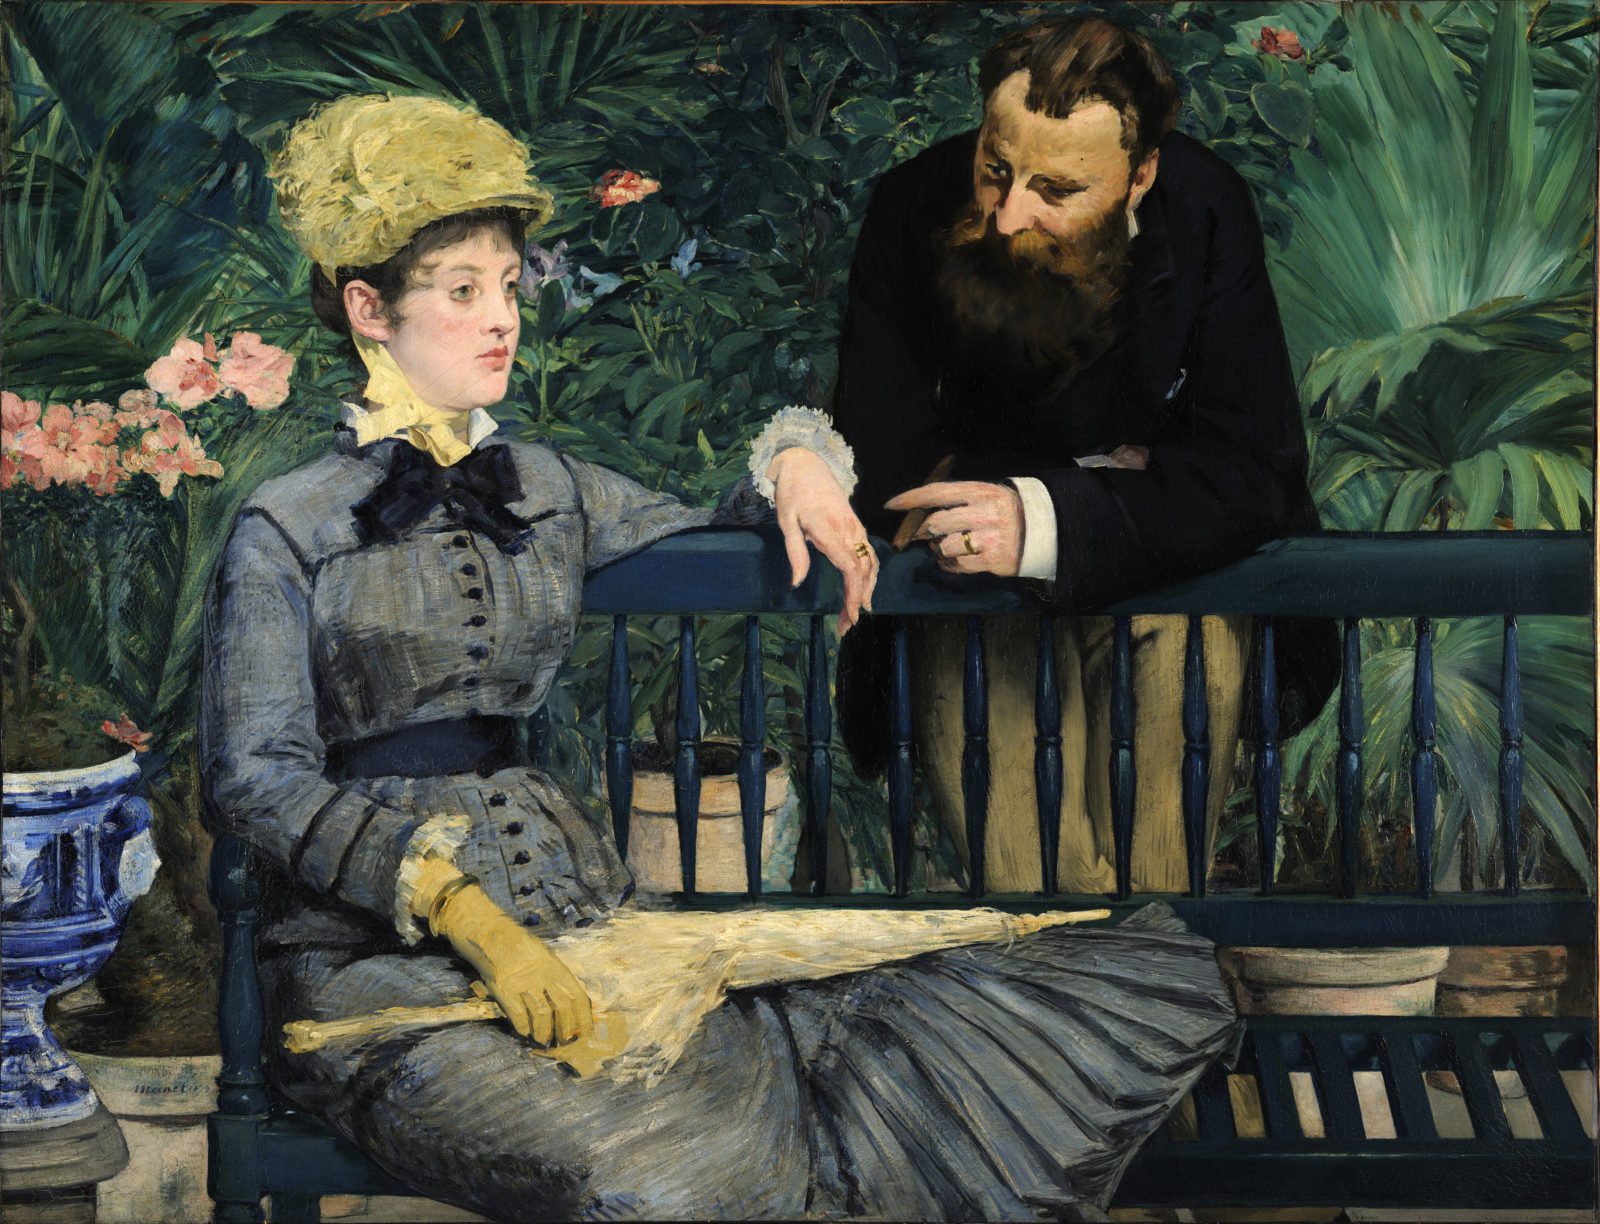 Alte Nationalgalerie Highlights: Édouard Manet, In the Conservatory, 1878-9, Alte Nationalgalerie, Berlin, Germany.